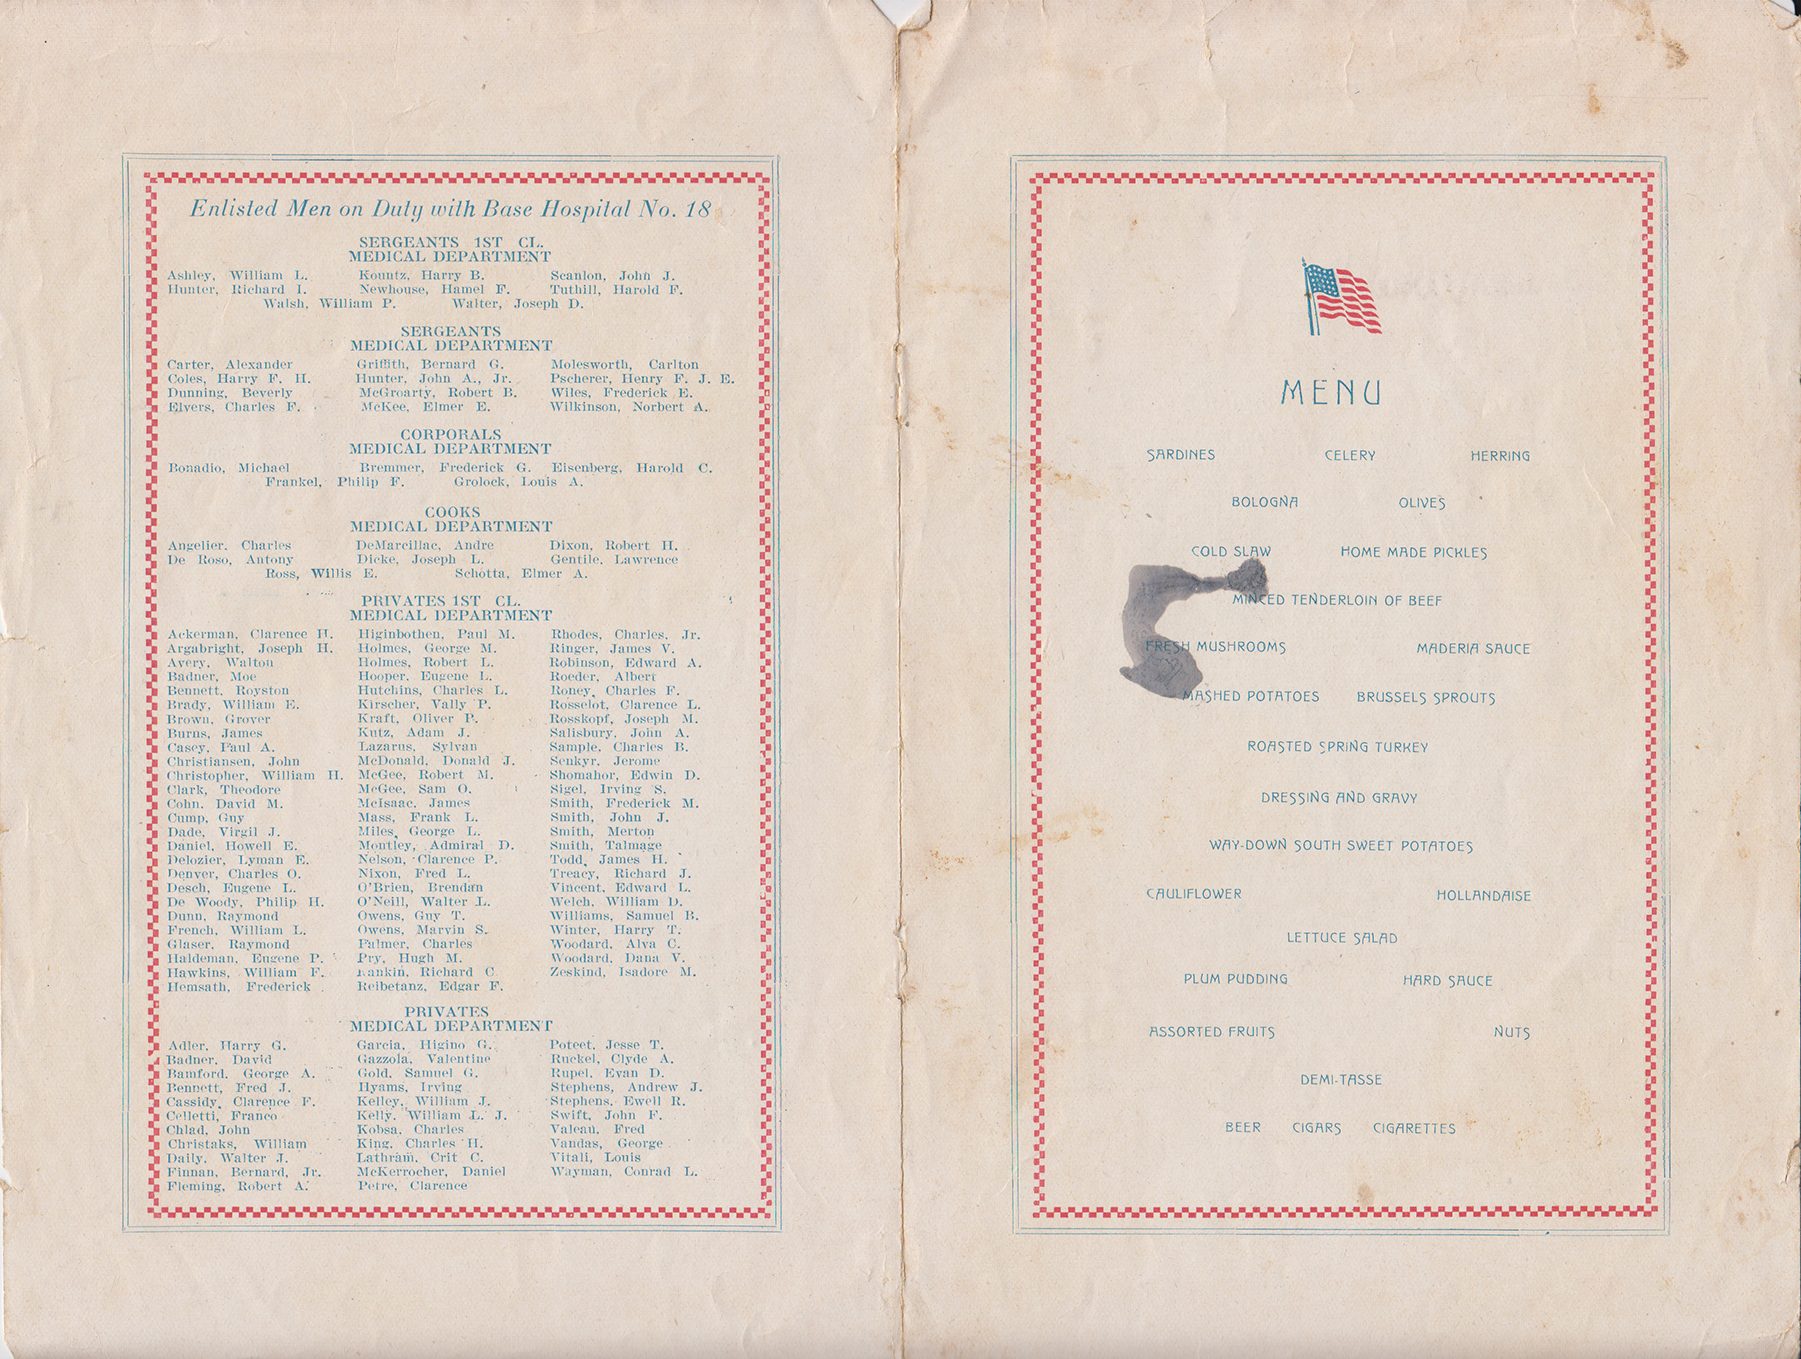 Base Hospital 18, Thanksgiving Dinner Menu, Nov. 18, 1918, personnel and food menu